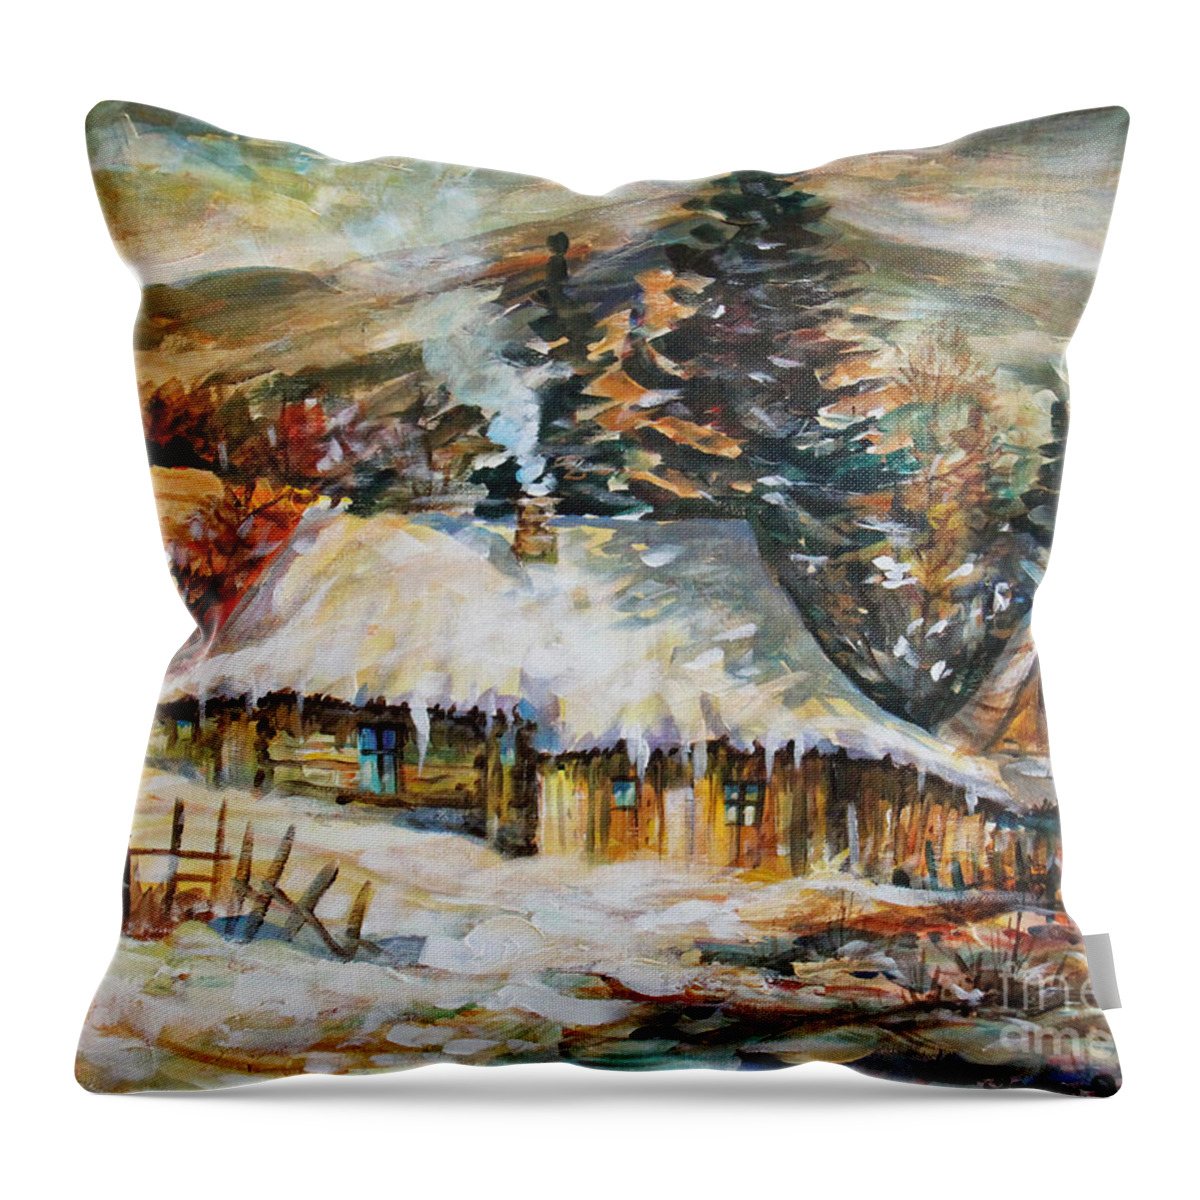 Winter Magic Throw Pillow featuring the painting Winter Magic by Dariusz Orszulik